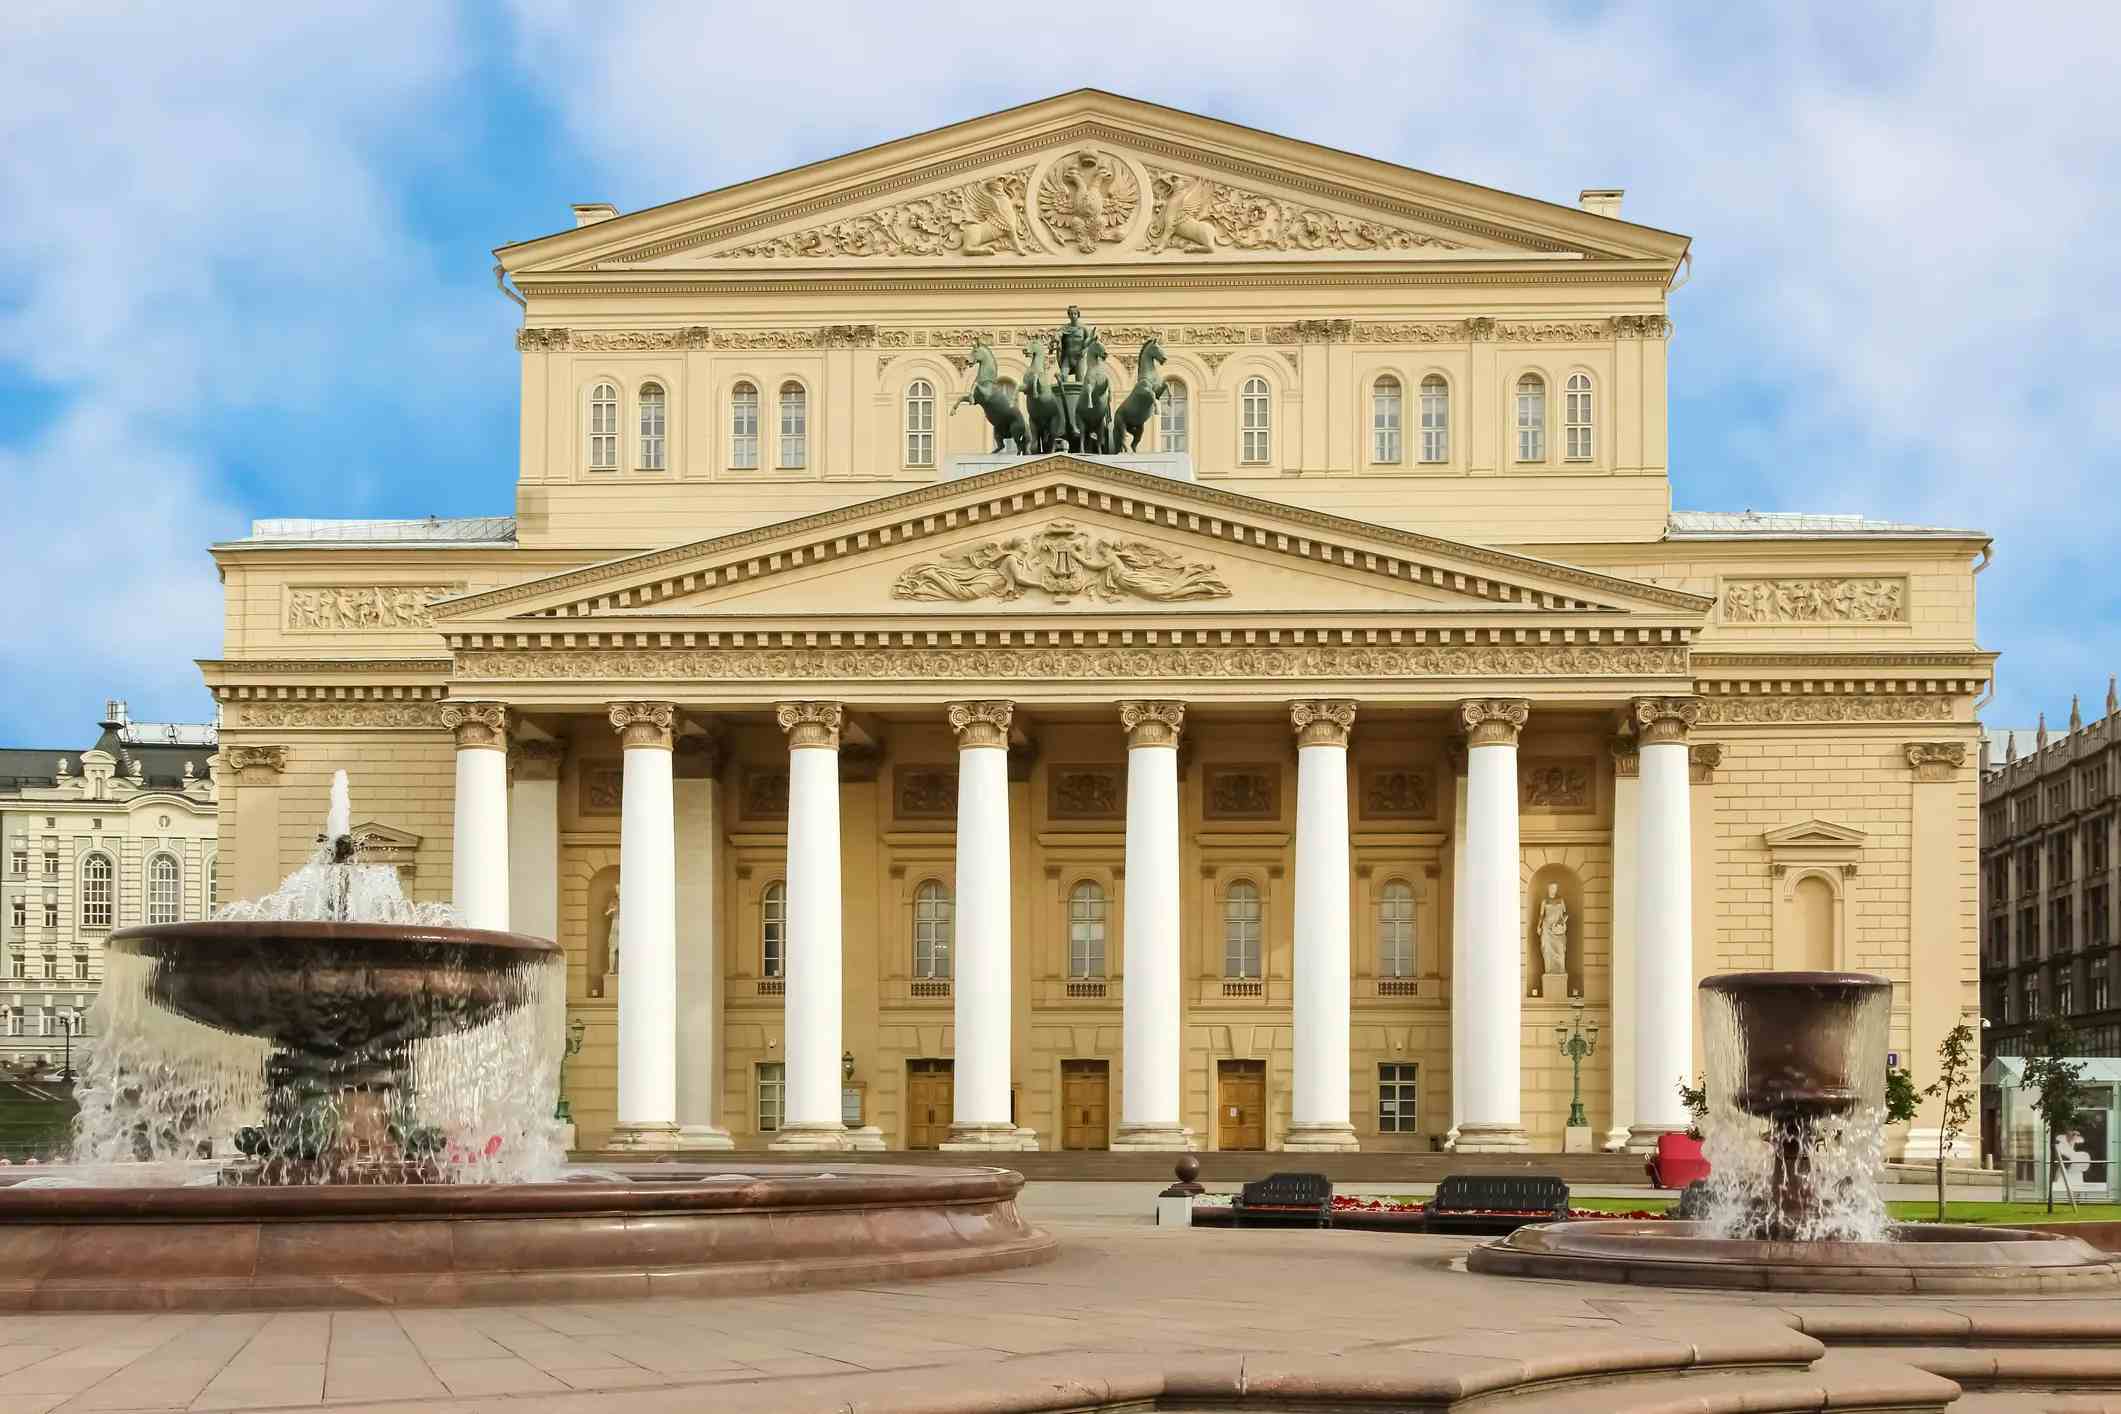 Bolshoi Theatre image